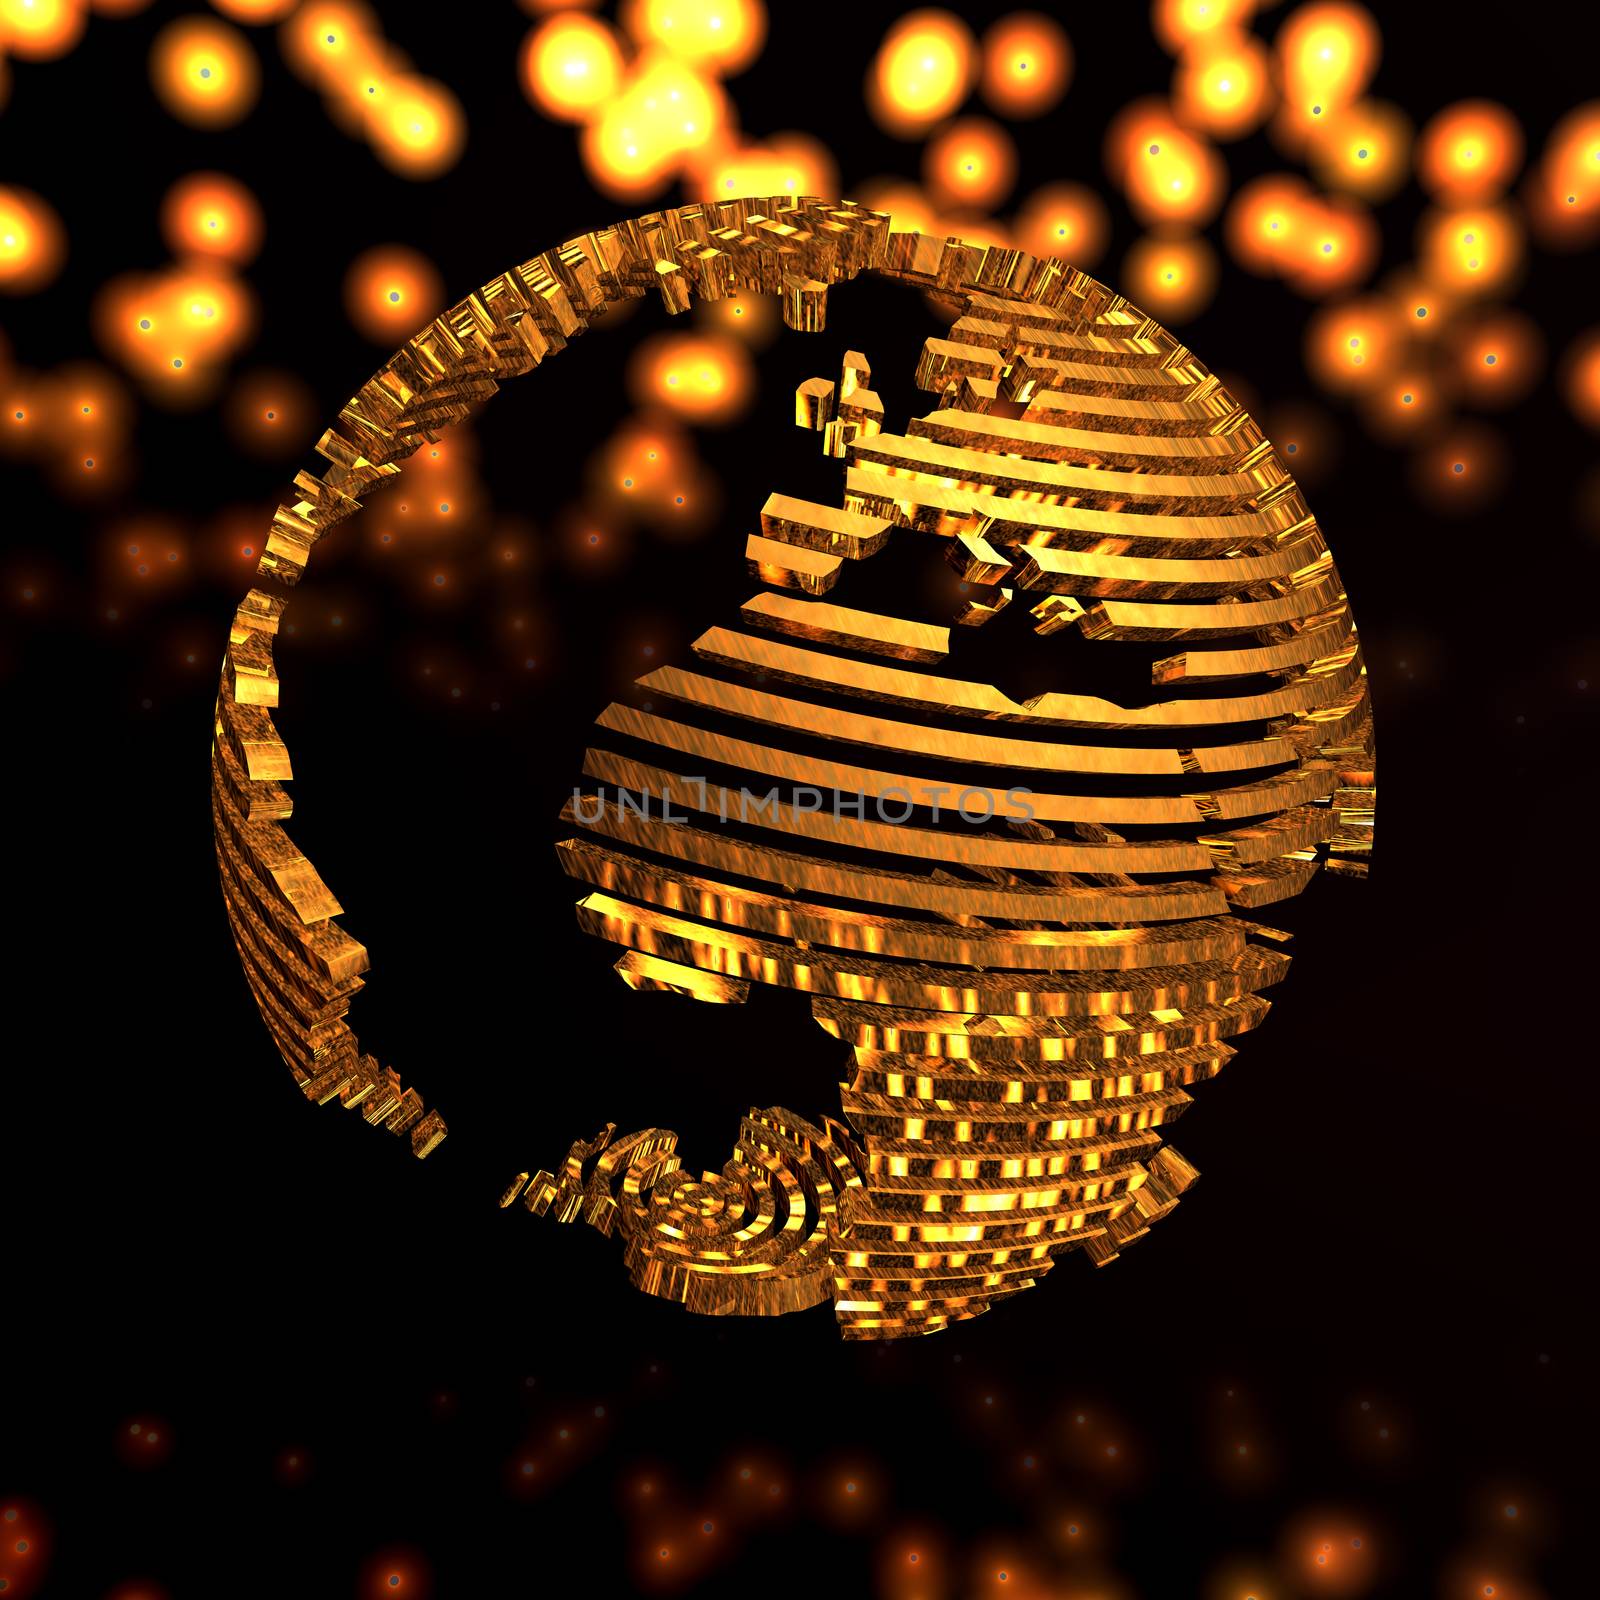 Digital Illustration of a Globe